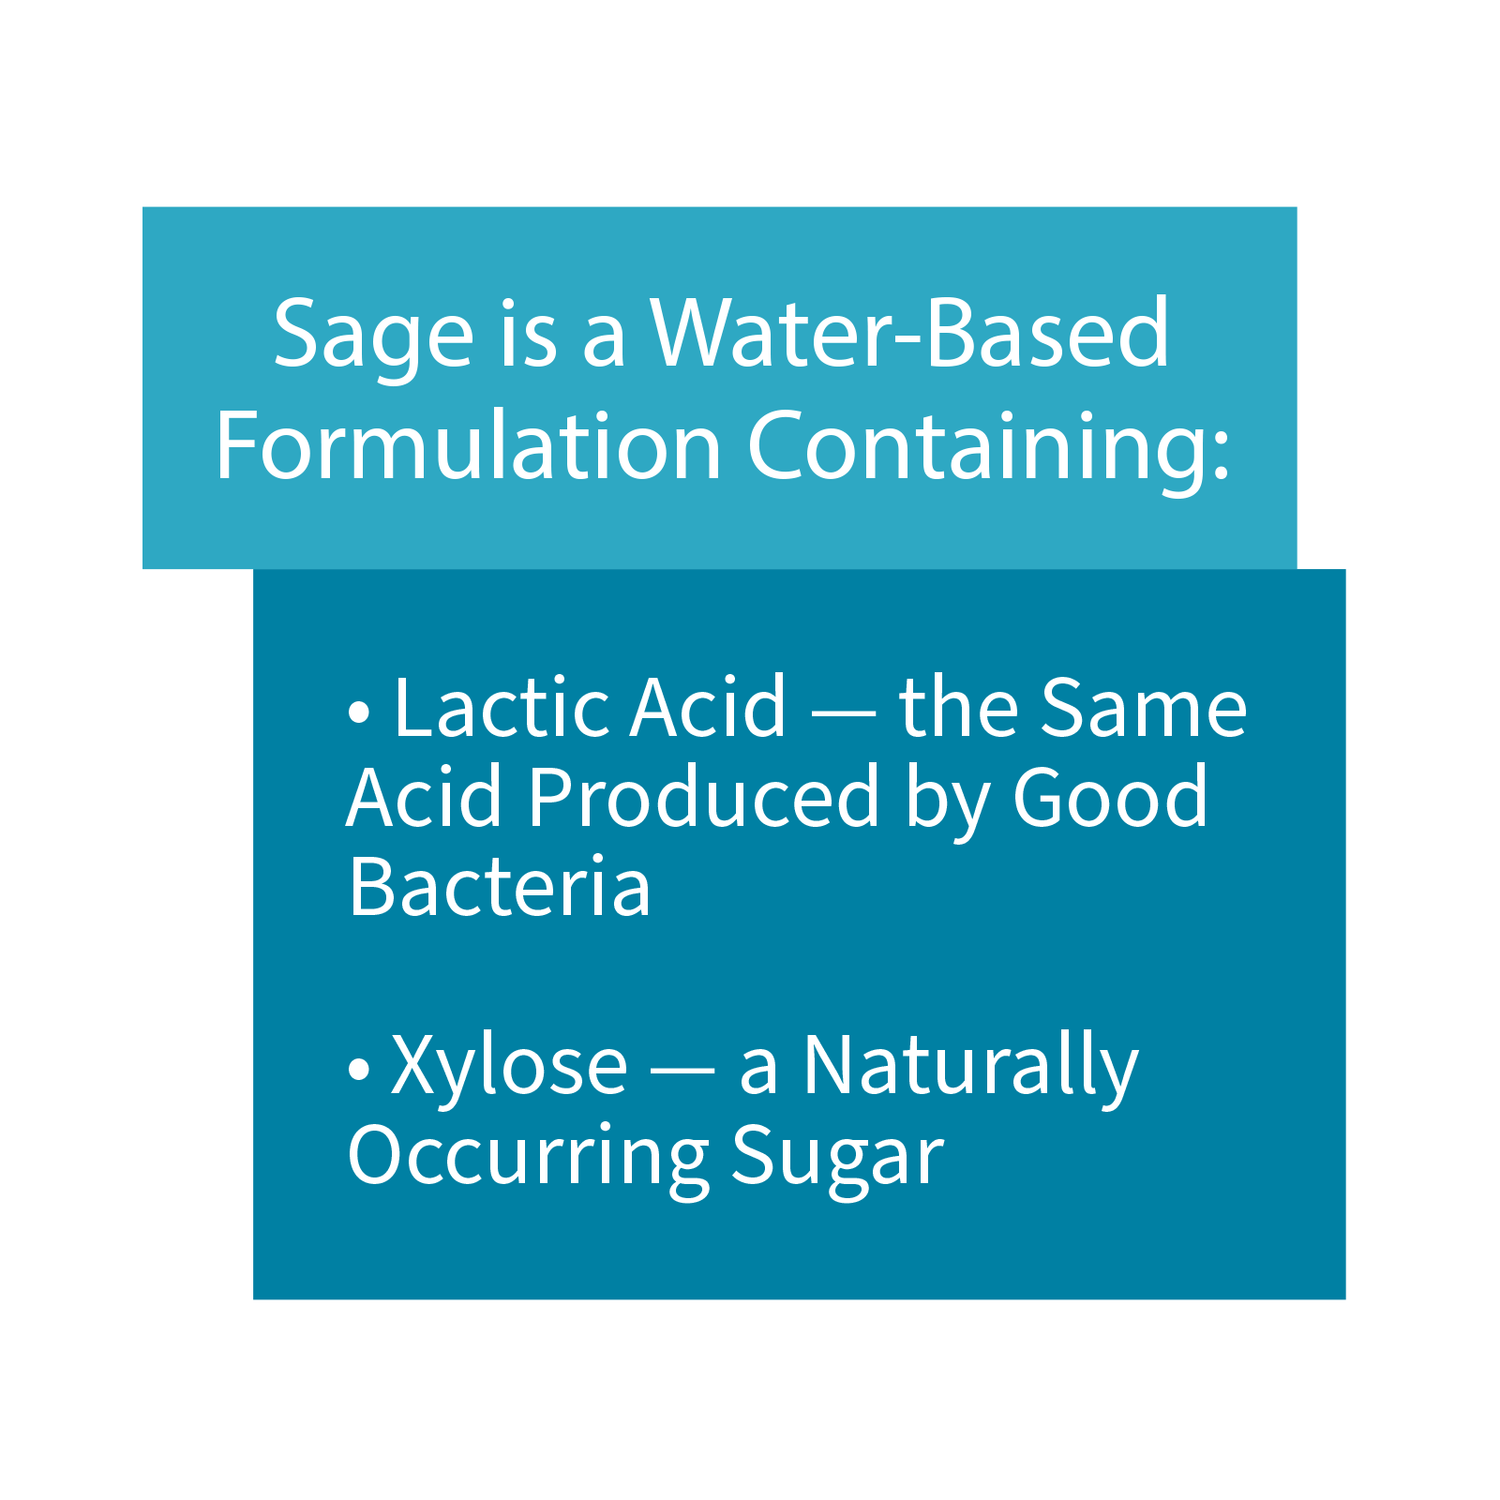 Sage is a water-based formulation